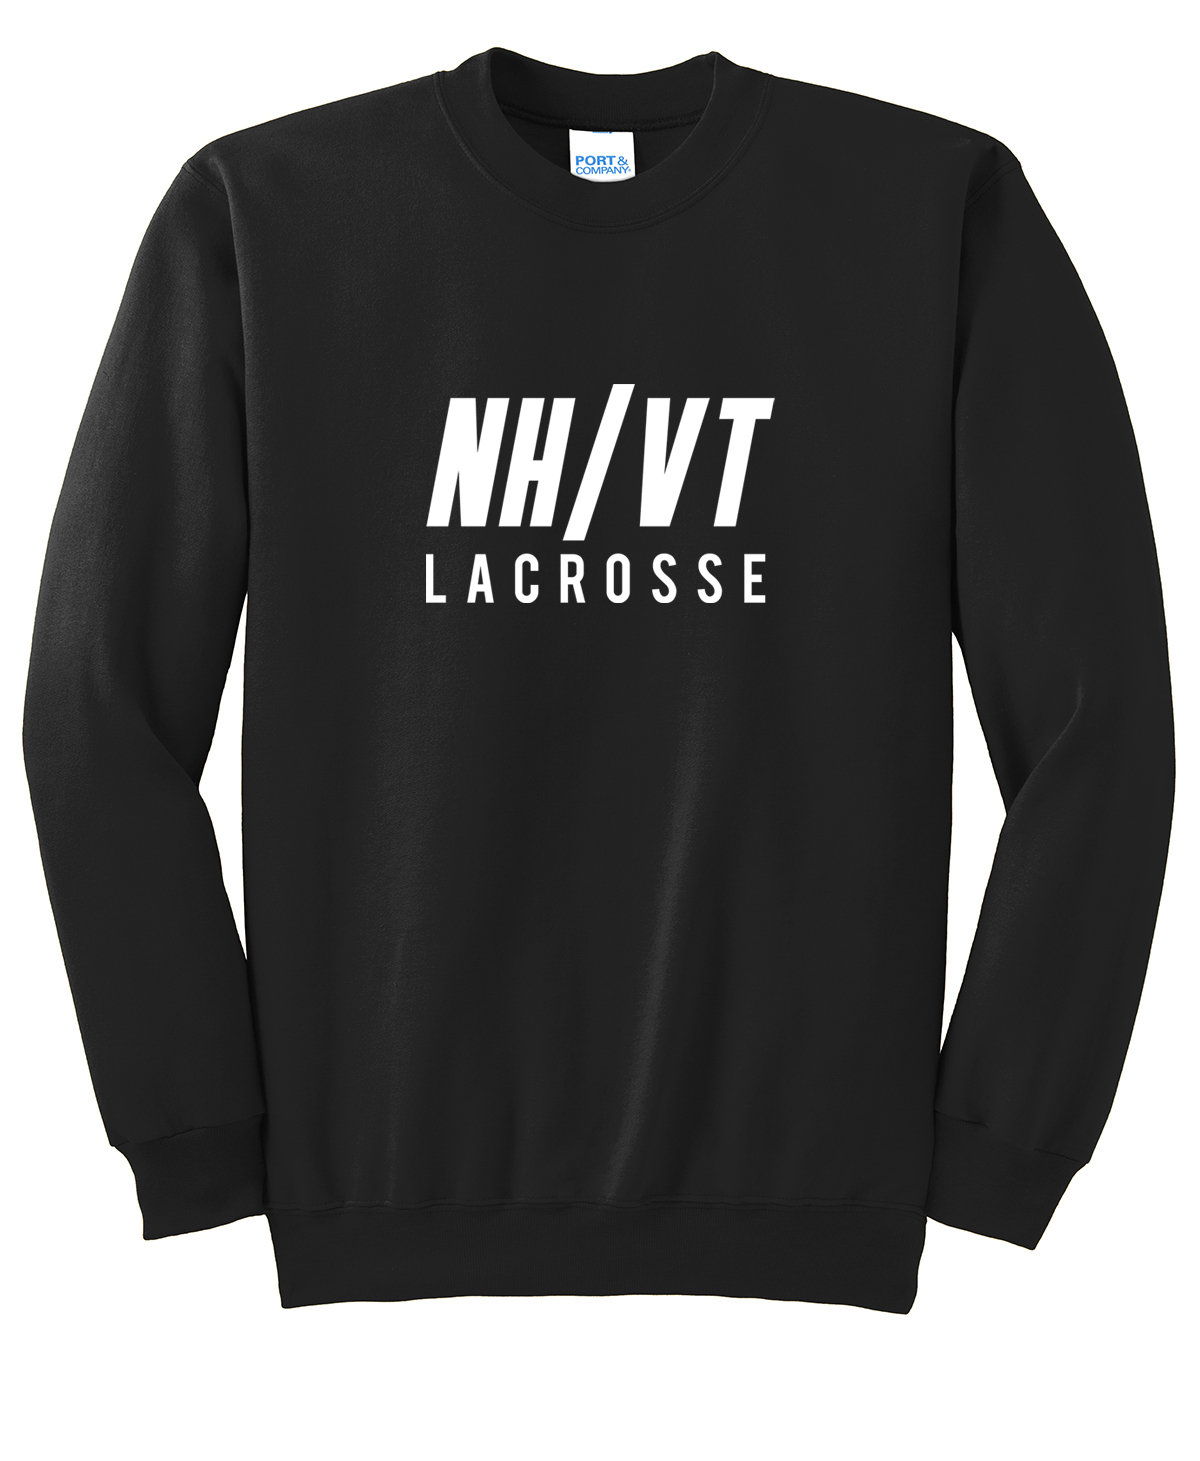 NH/VT Lacrosse Crew Neck Sweater